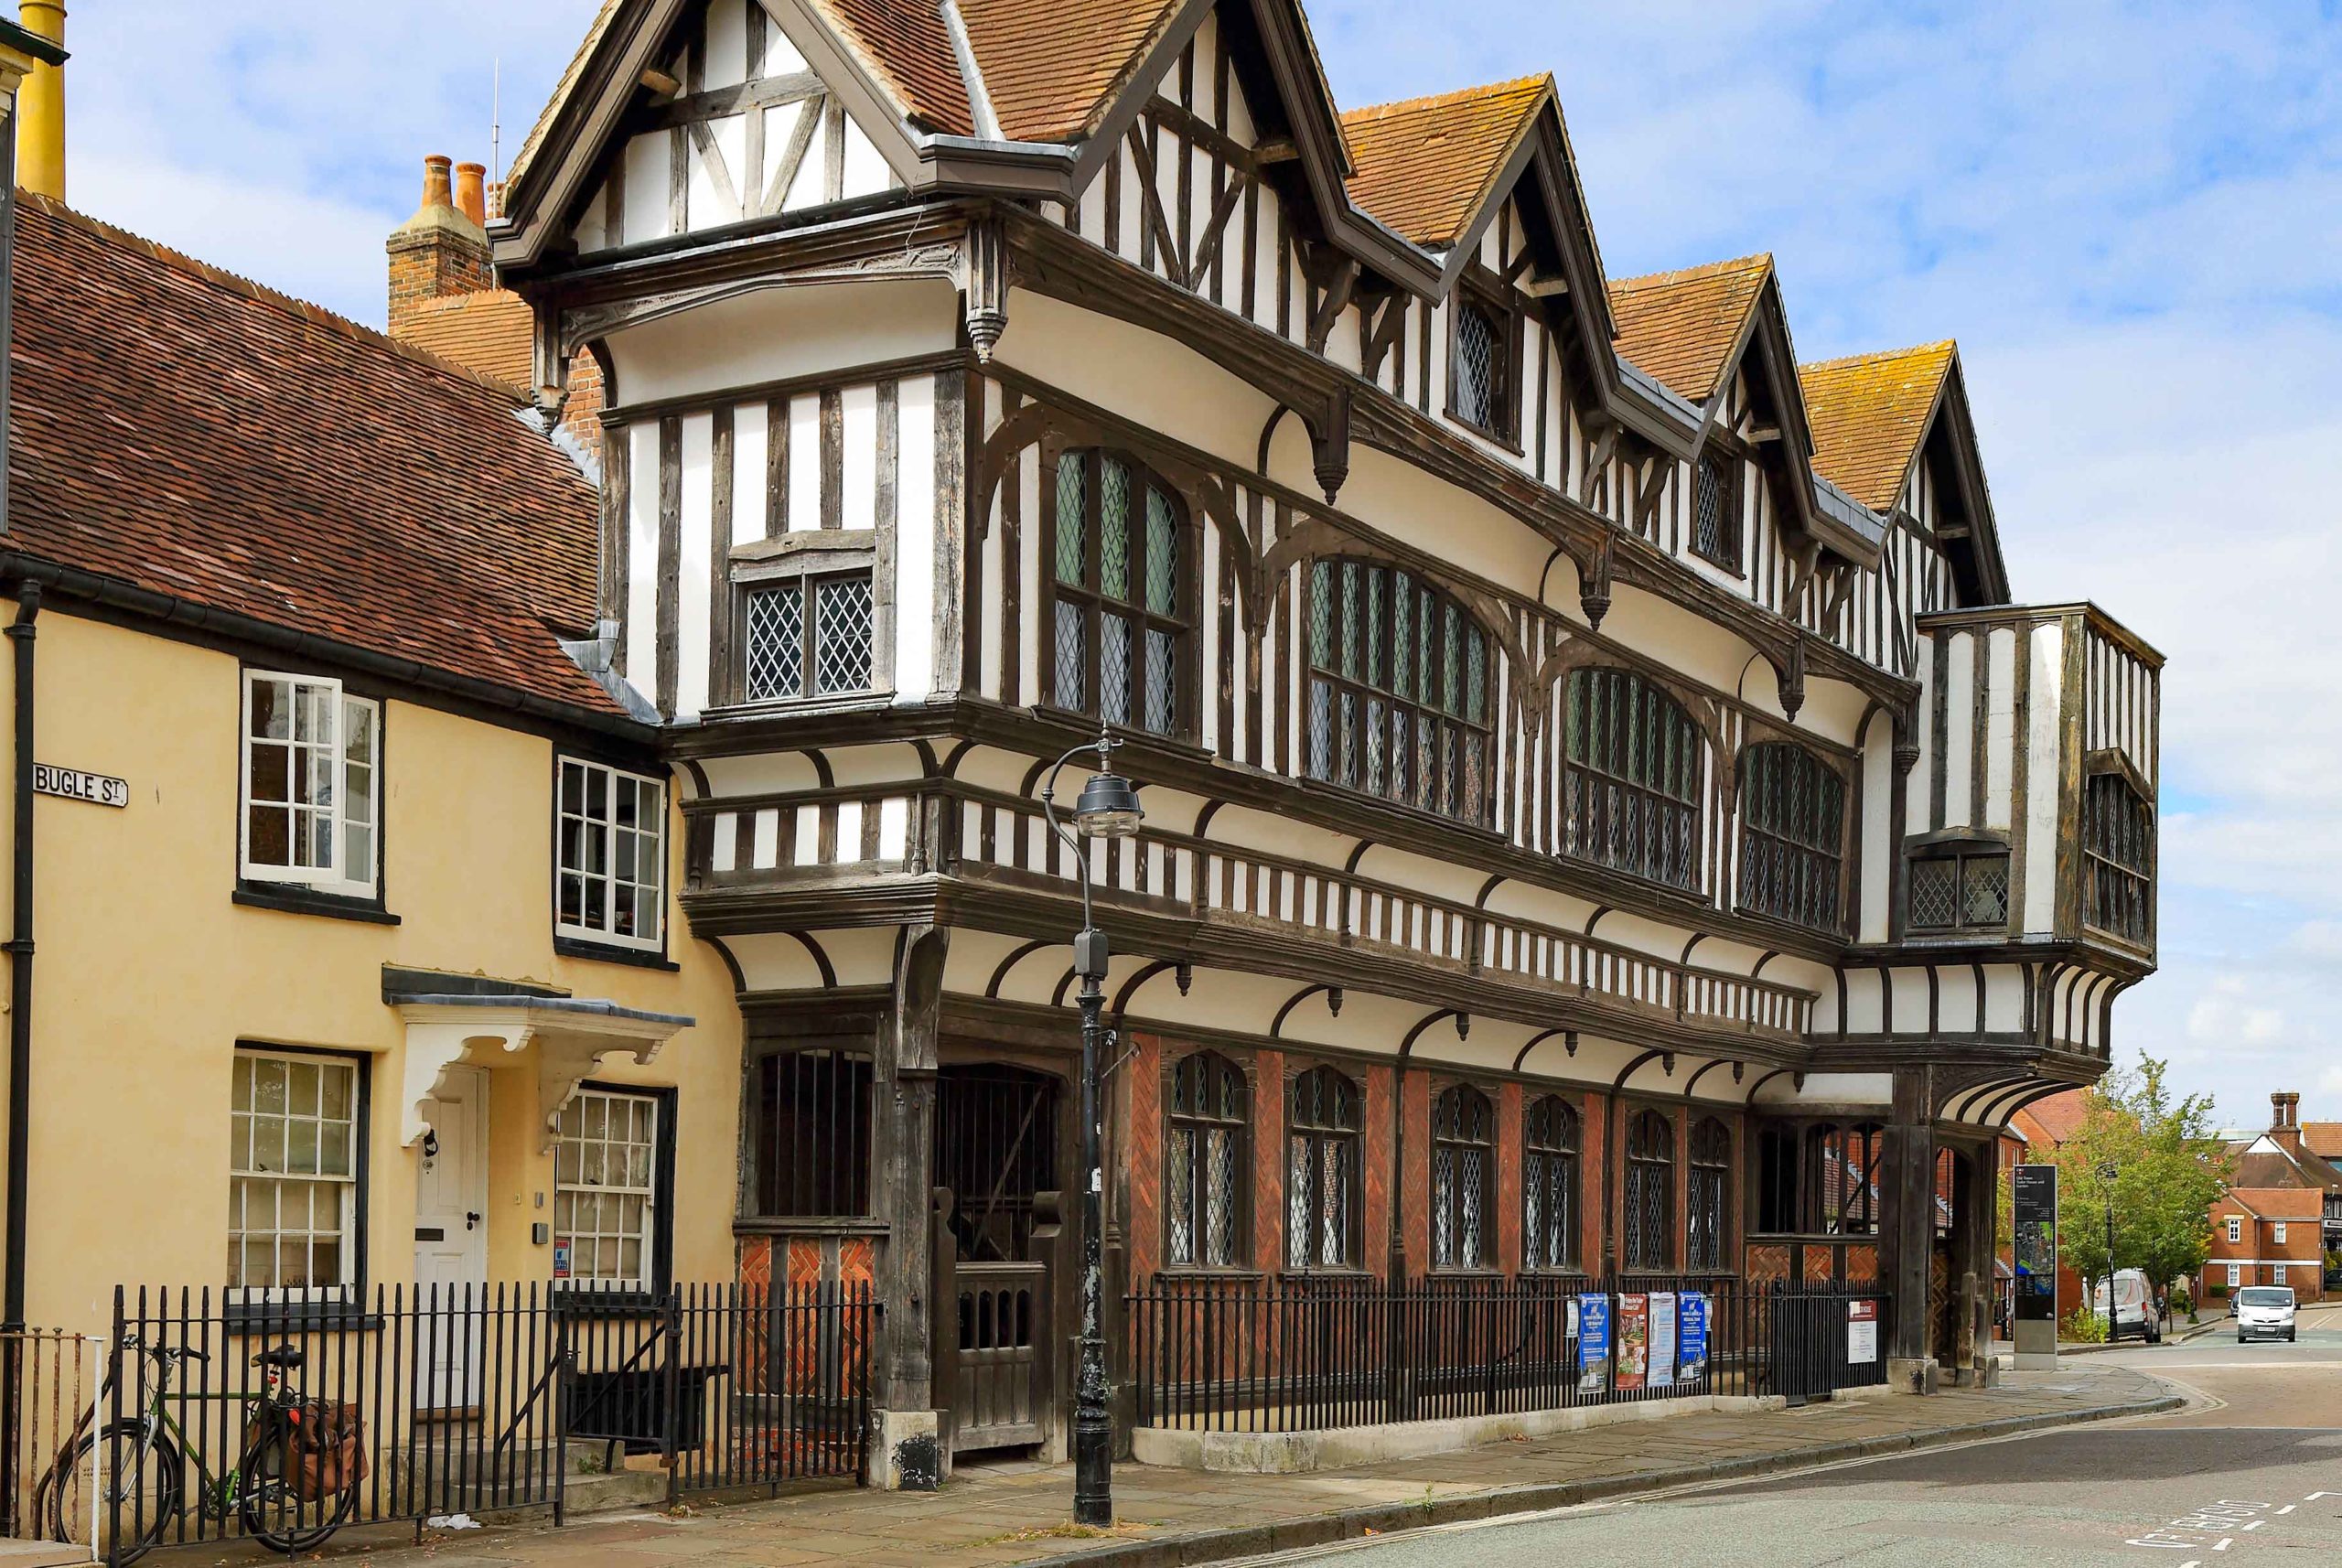 Southampton Tudor House © Martin Falbisoner - licence [CC BY-SA 4.0] from Wikimedia Commons